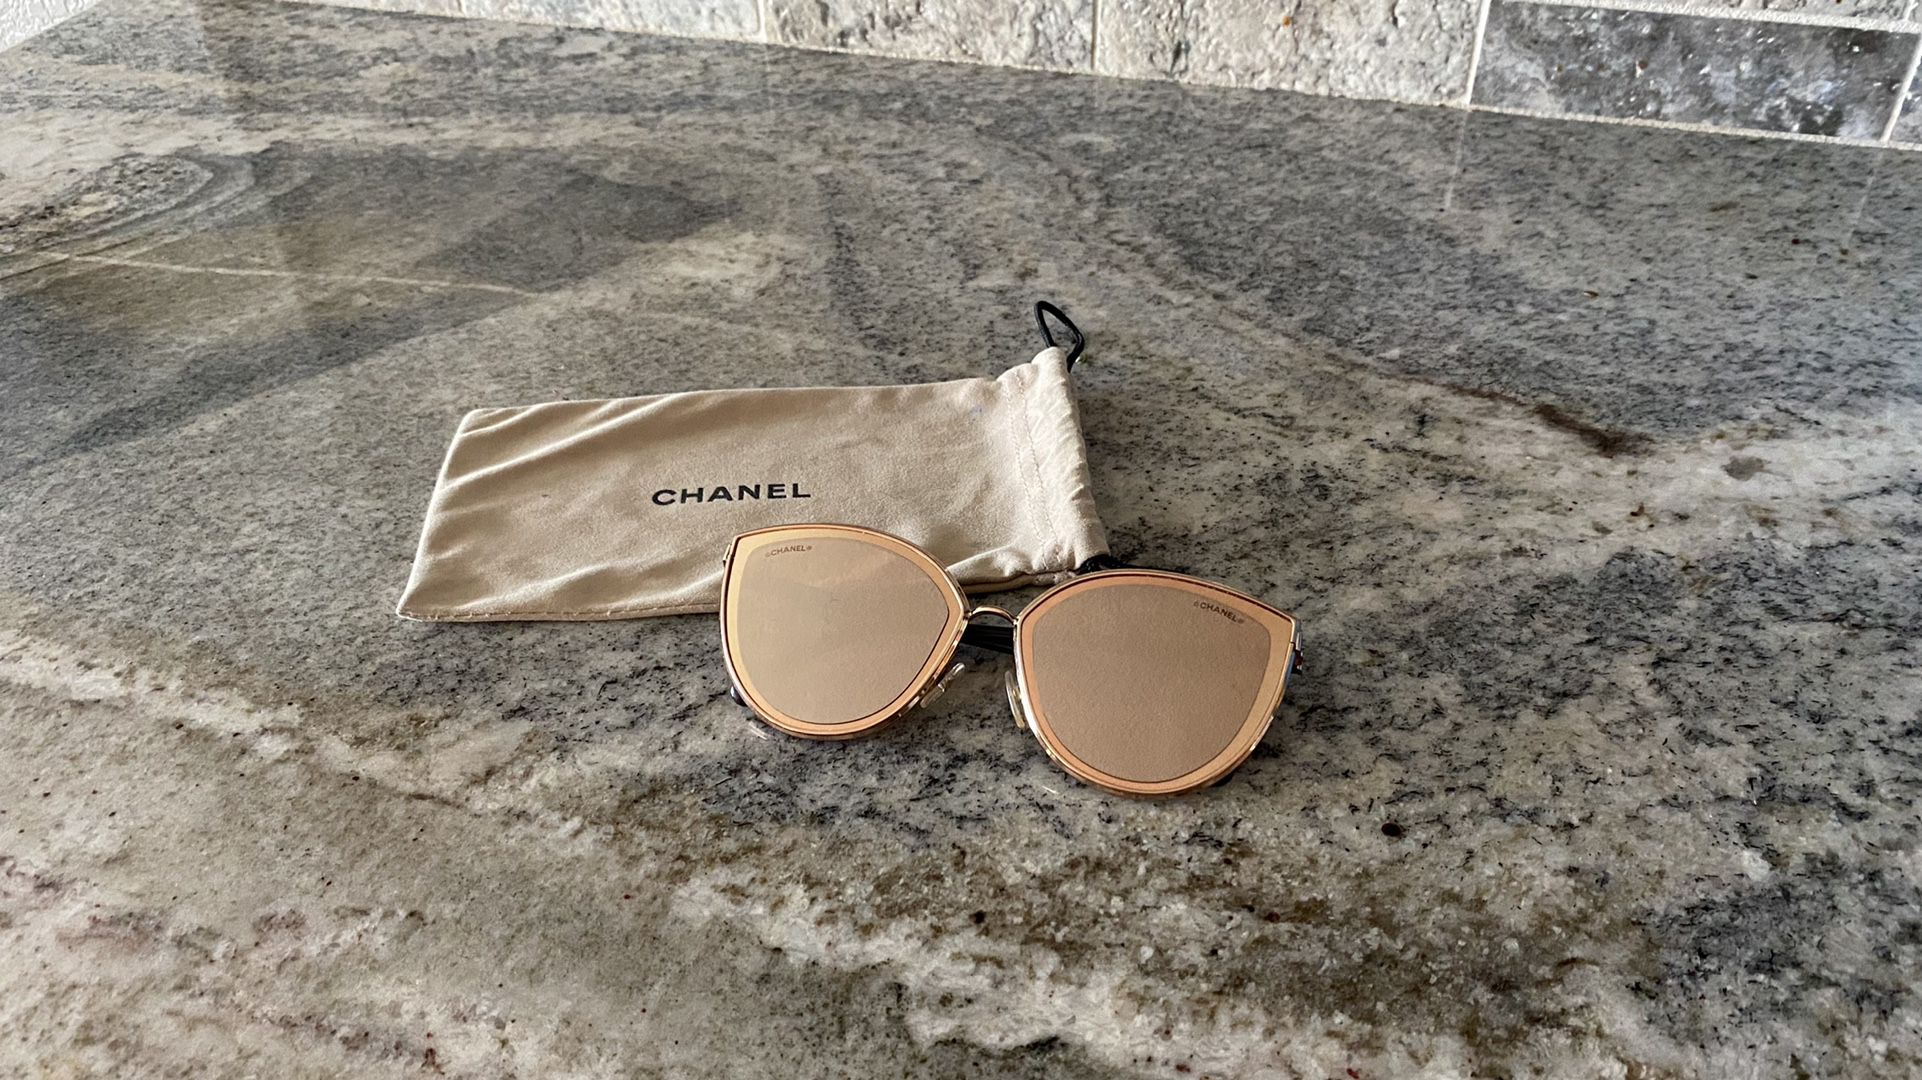 CHANEL Sunglasses for sale in Phoenix, Arizona